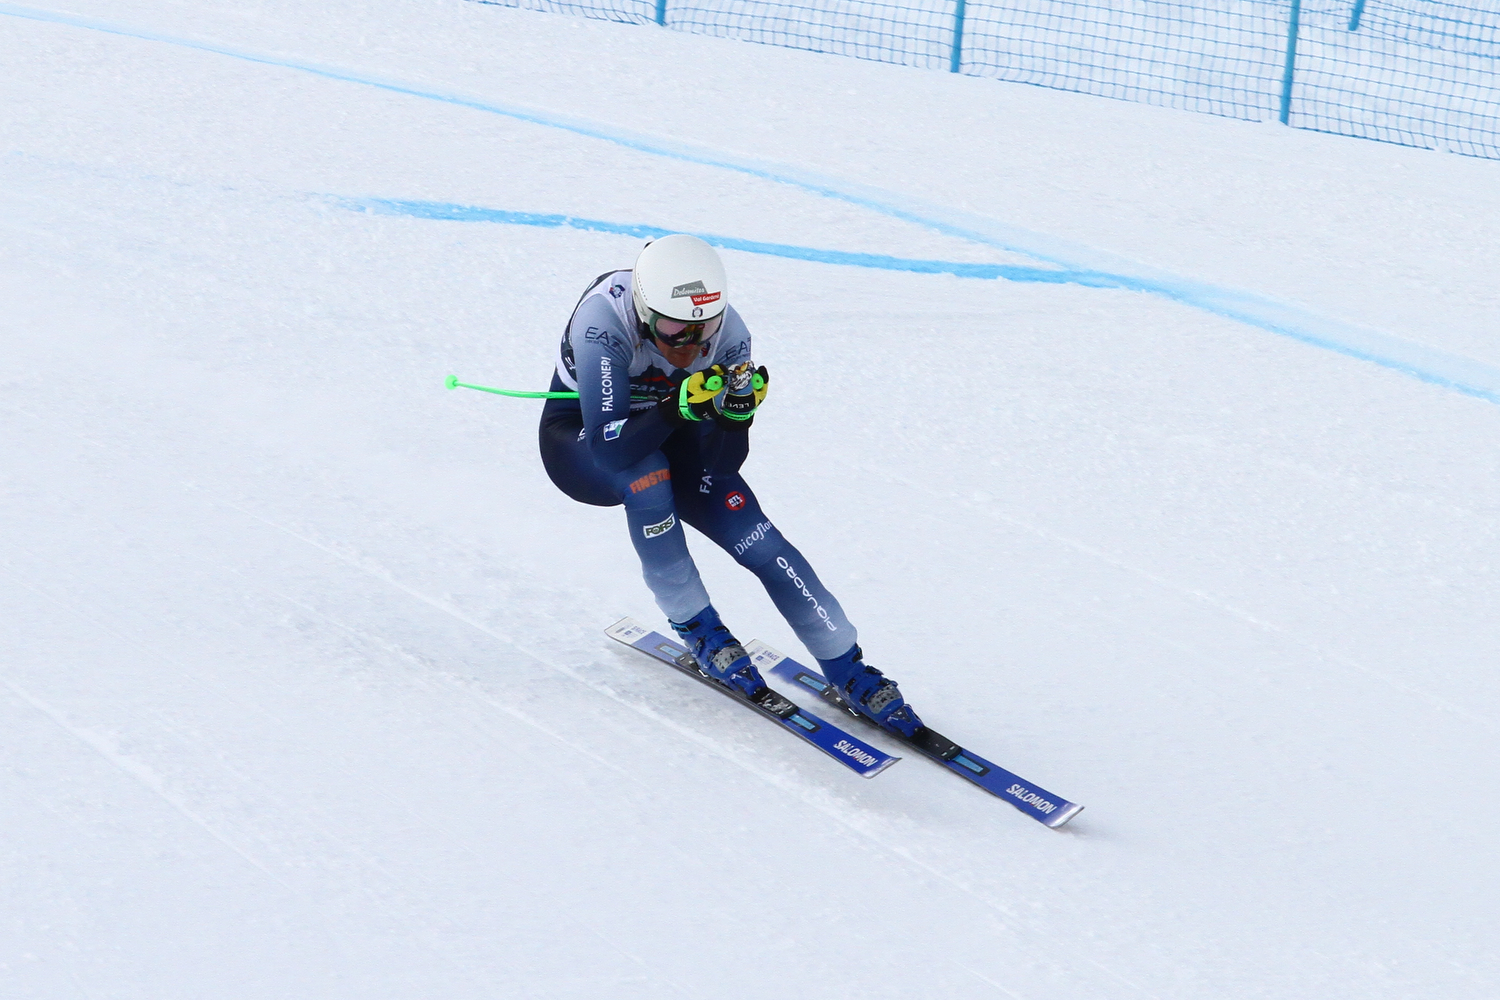 Fis Alpine Skiing Europa Cup, Santa Caterina Valfurva (ITA), 14/12/23, Max Perathoner, photo credit: Acmediapress